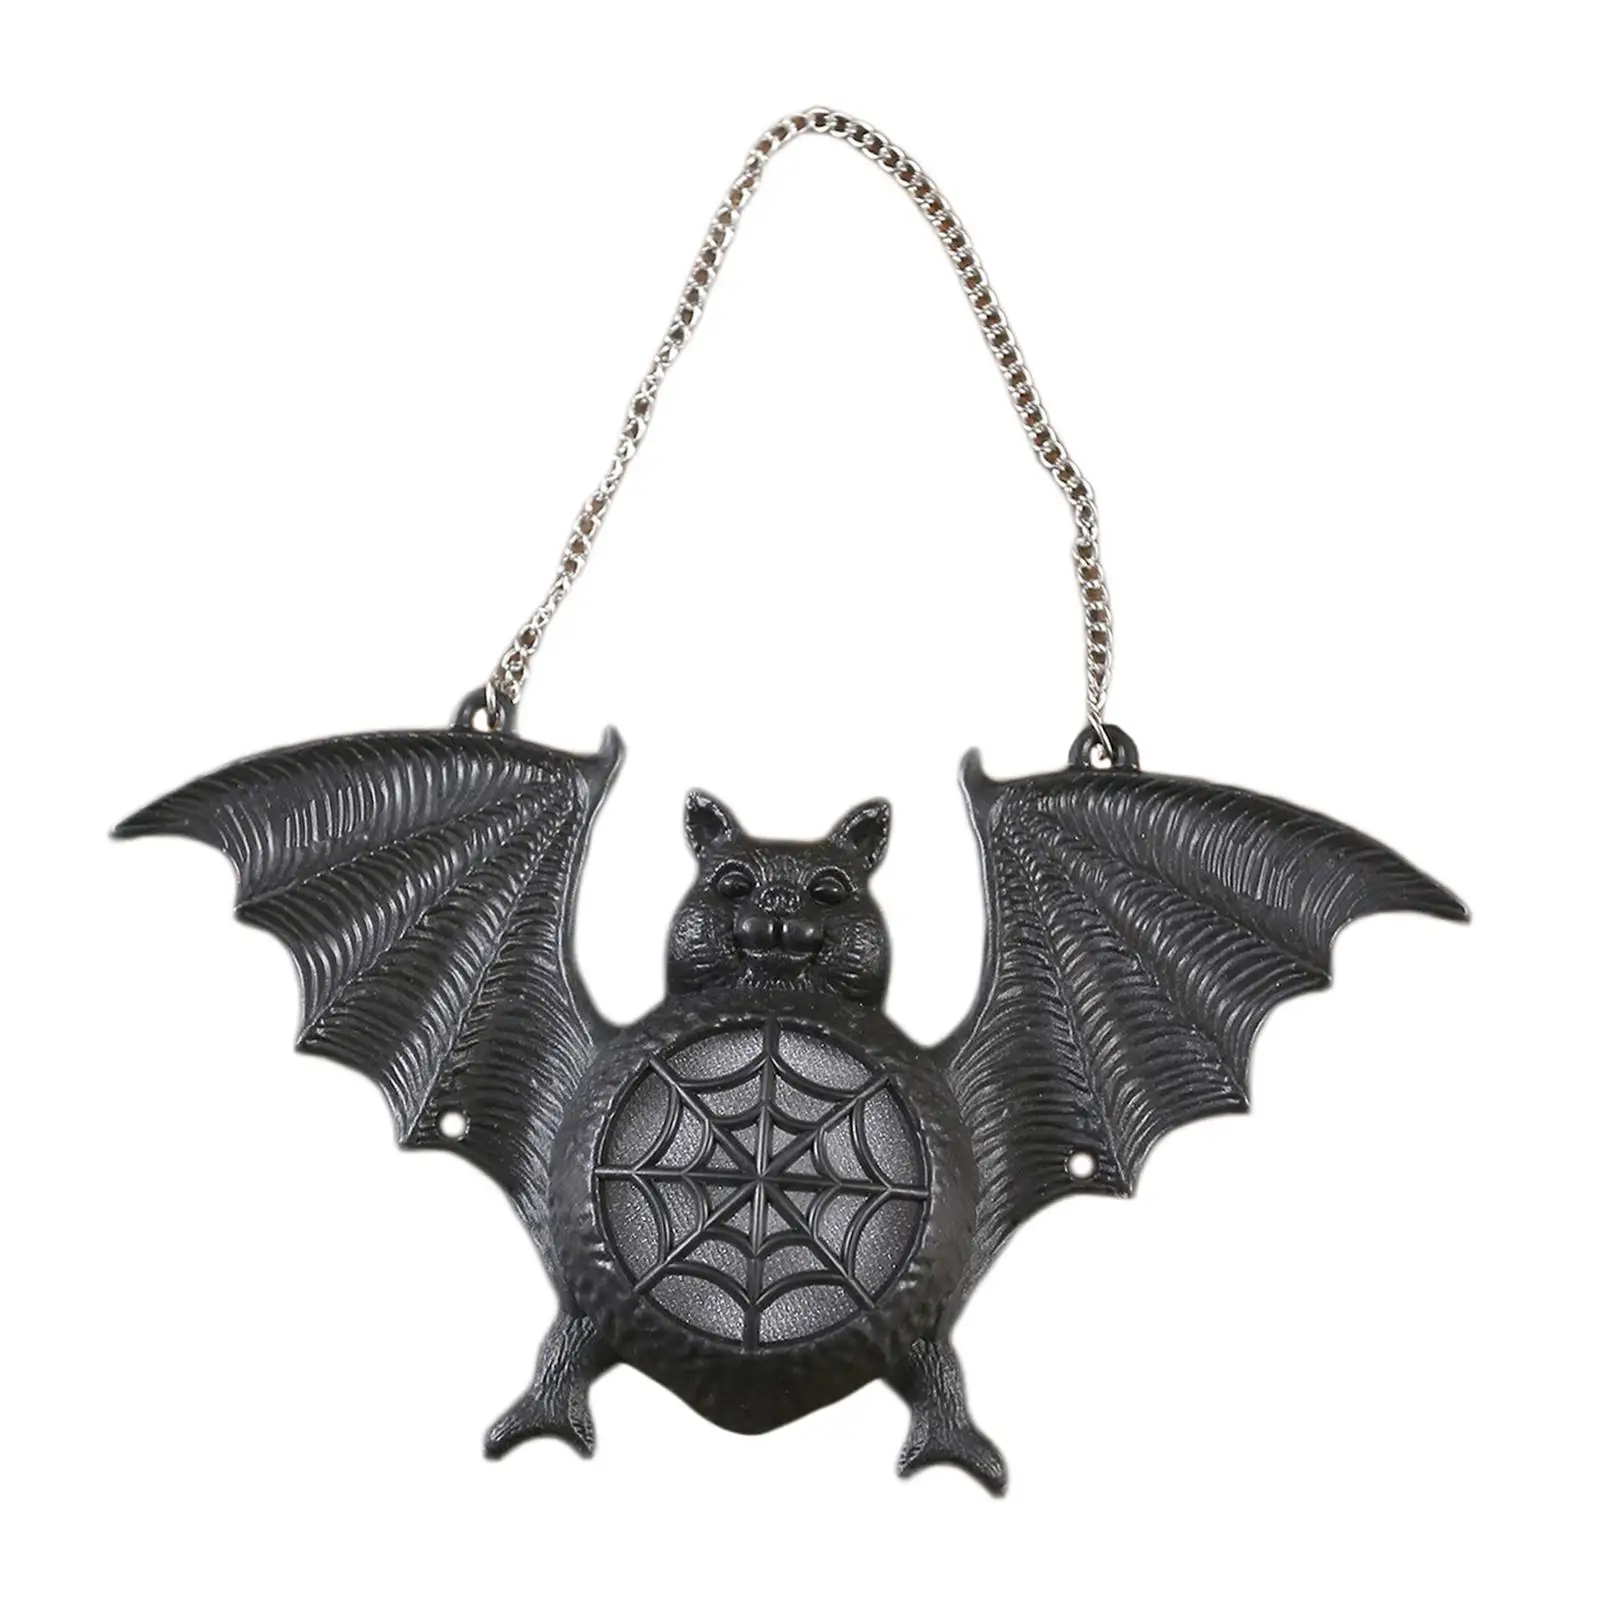 Bat Halloween Decorations Decor Pendents Hallowmas Party Supplies Gift Decorative DIY Realistic Bat for Wall Halloween Home Door